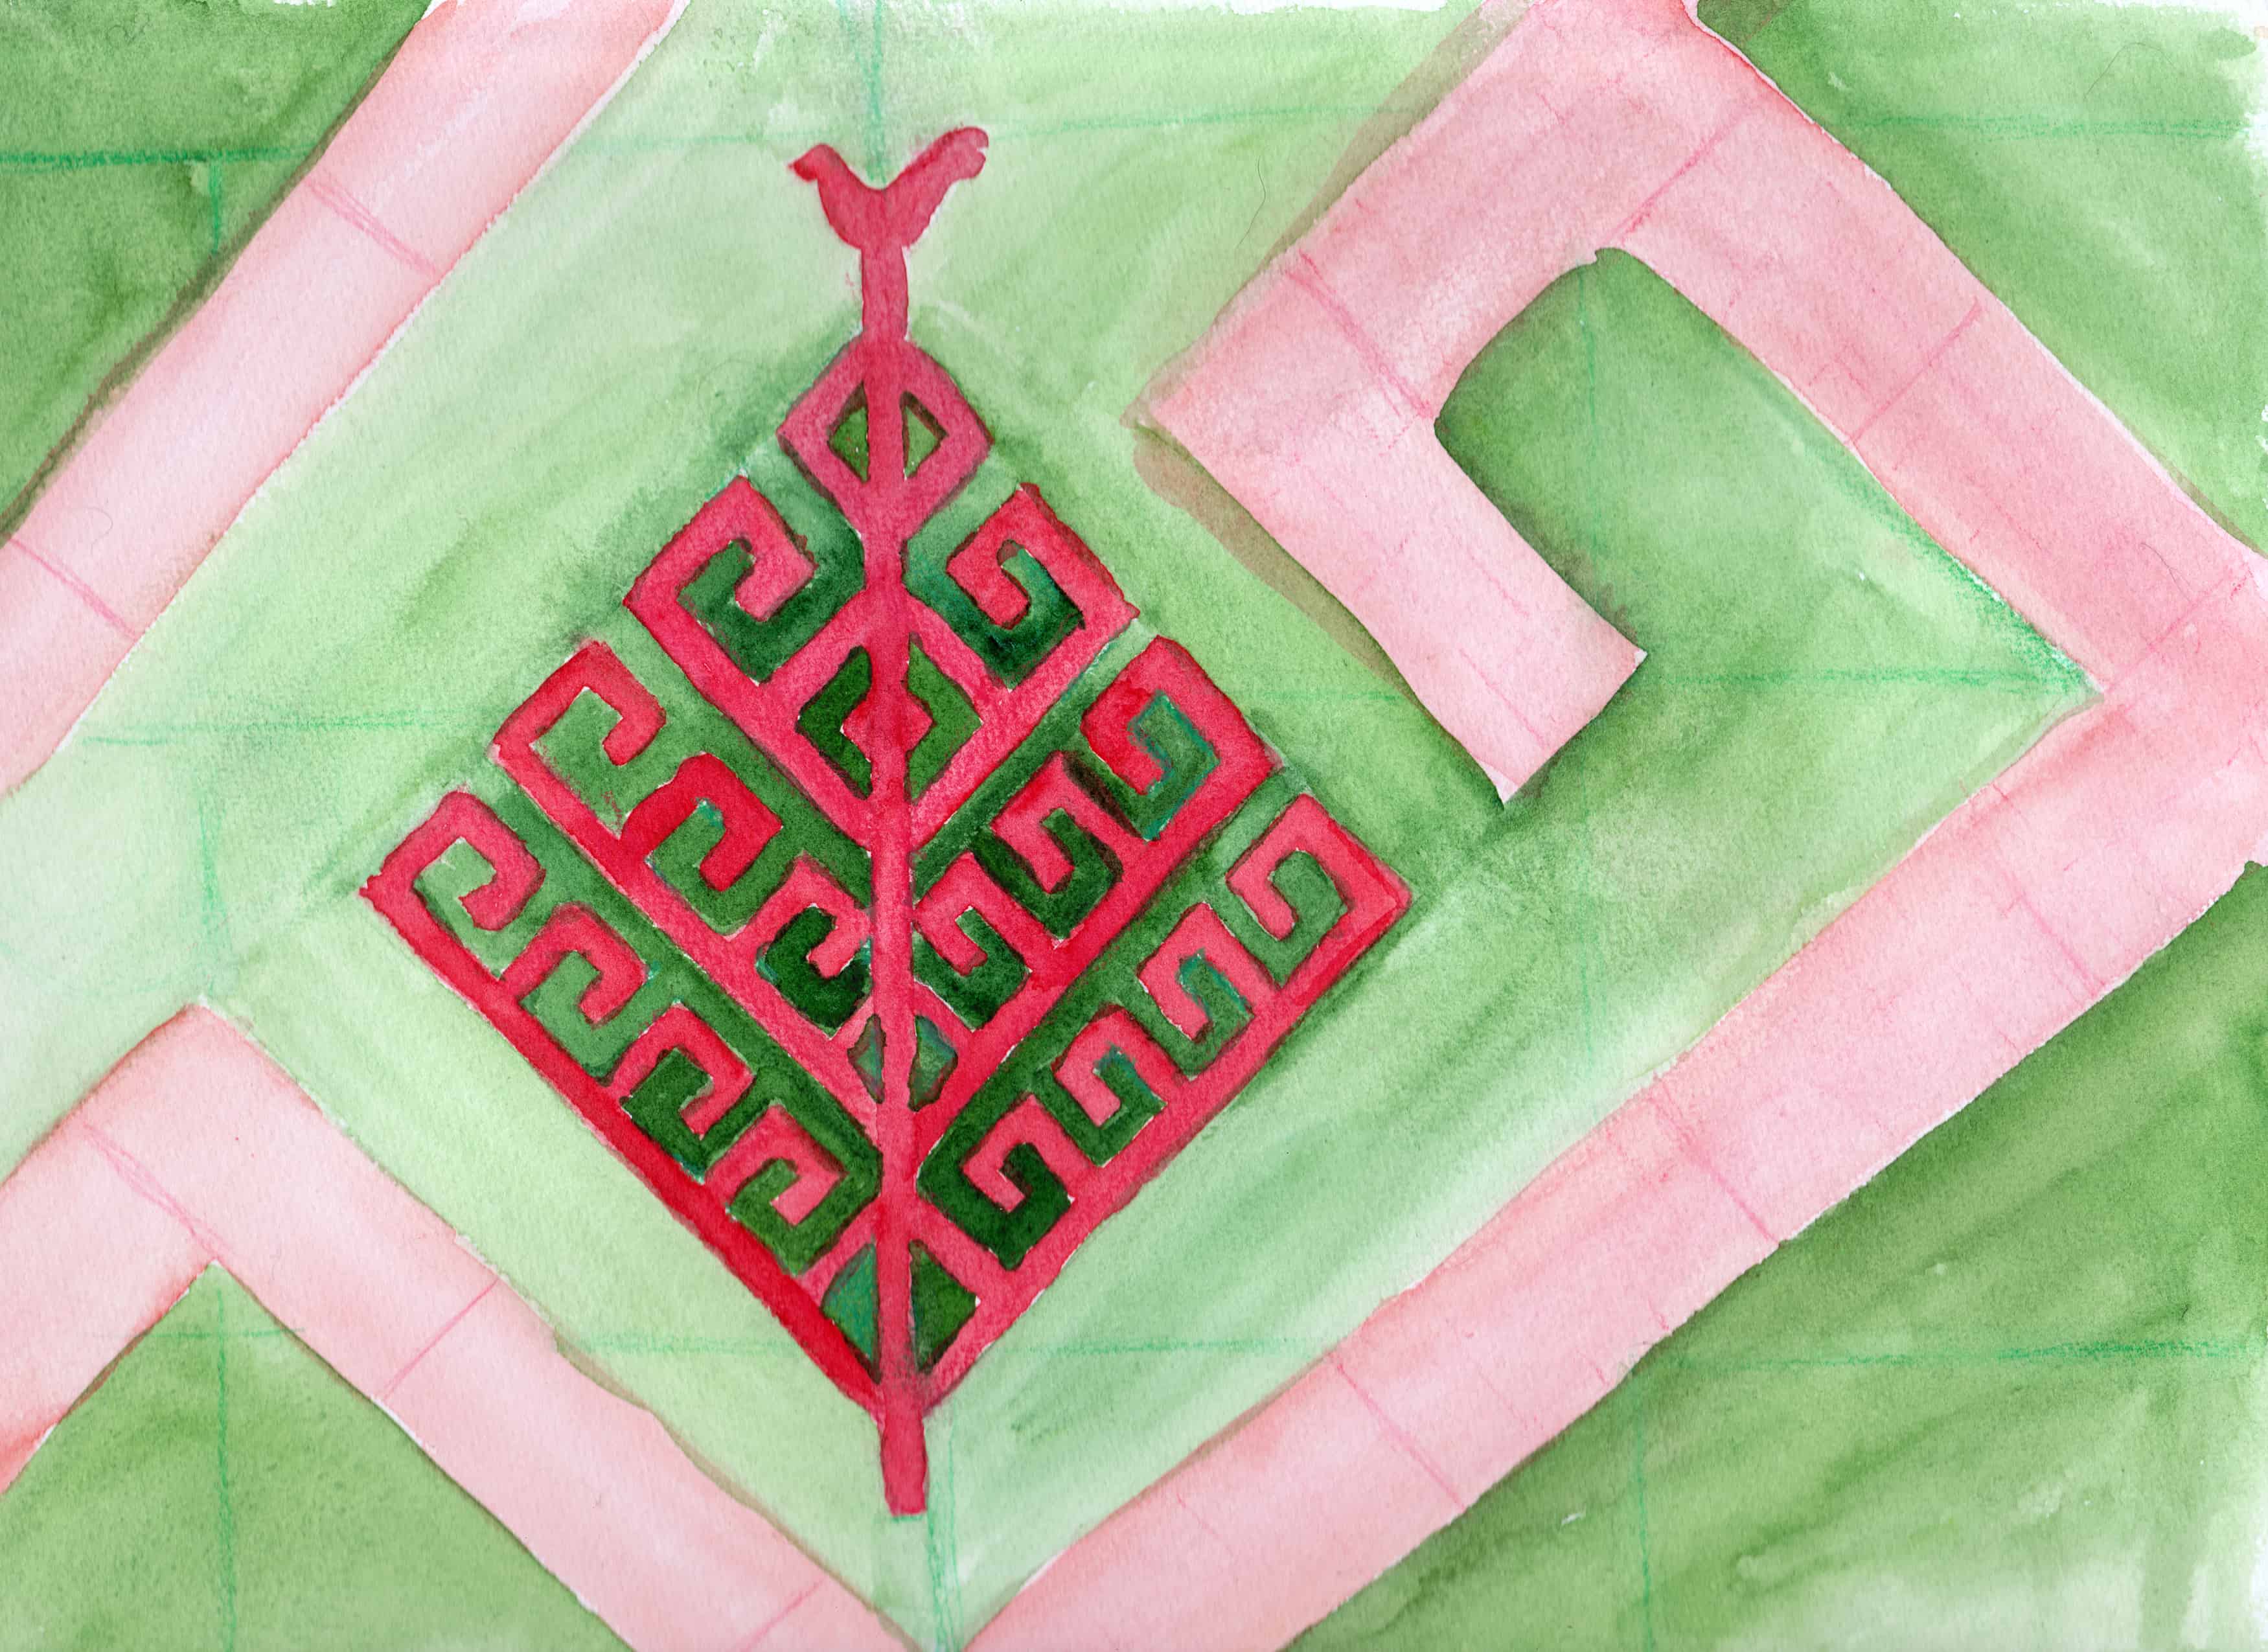 Yggdrasil - 100 Sacred Symbols in Watercolour by Linda Ursin